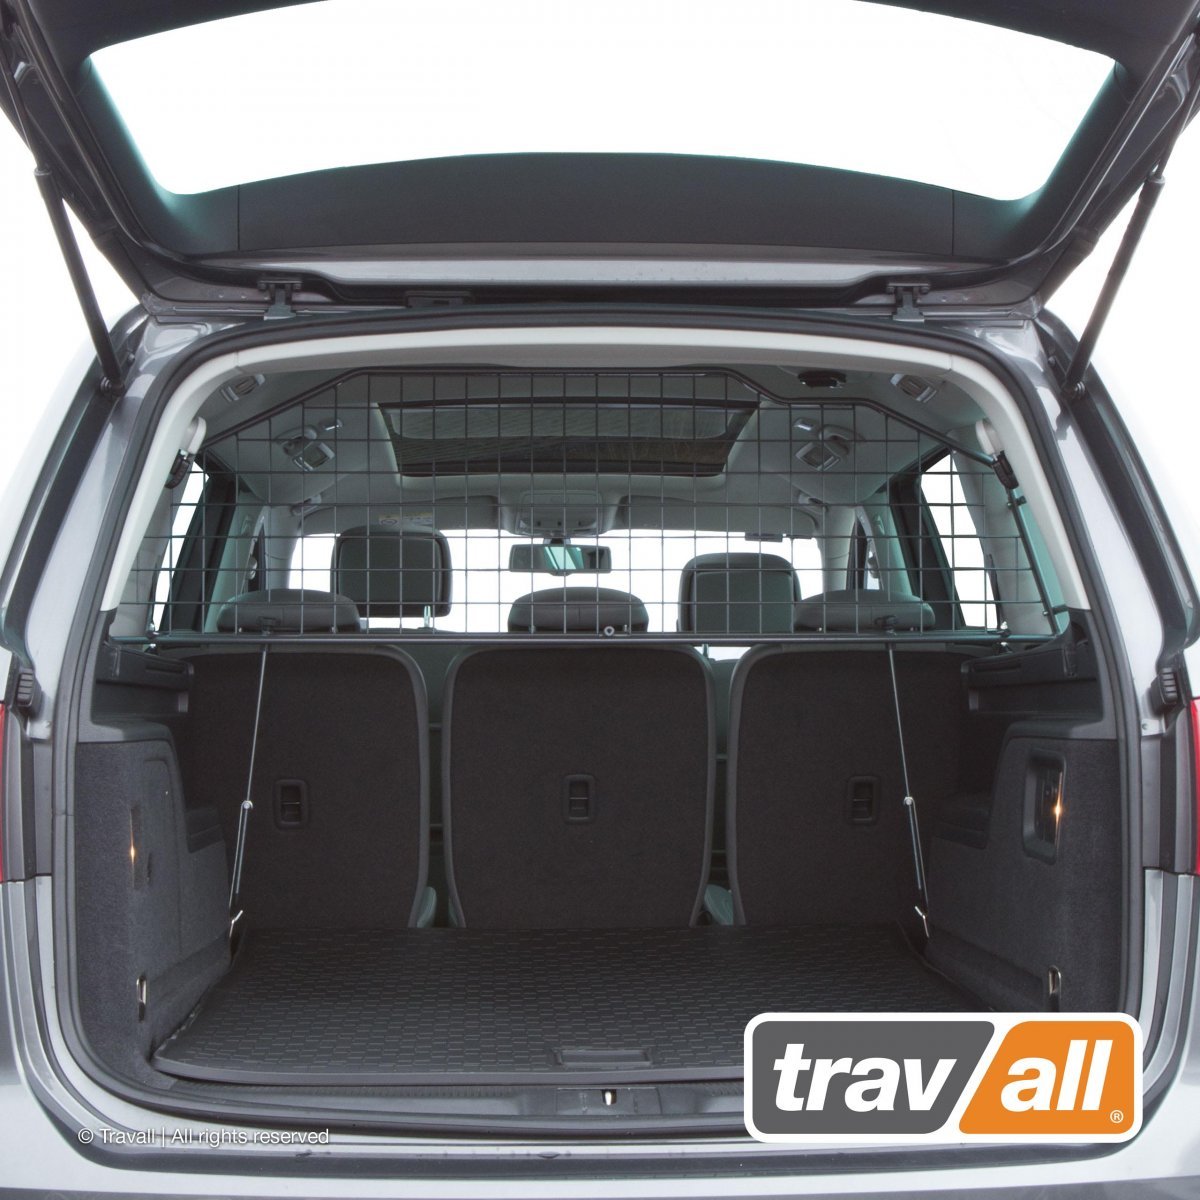 TravallGUARD for Seat Alhambra (2010>), VW Sharan (2010>)